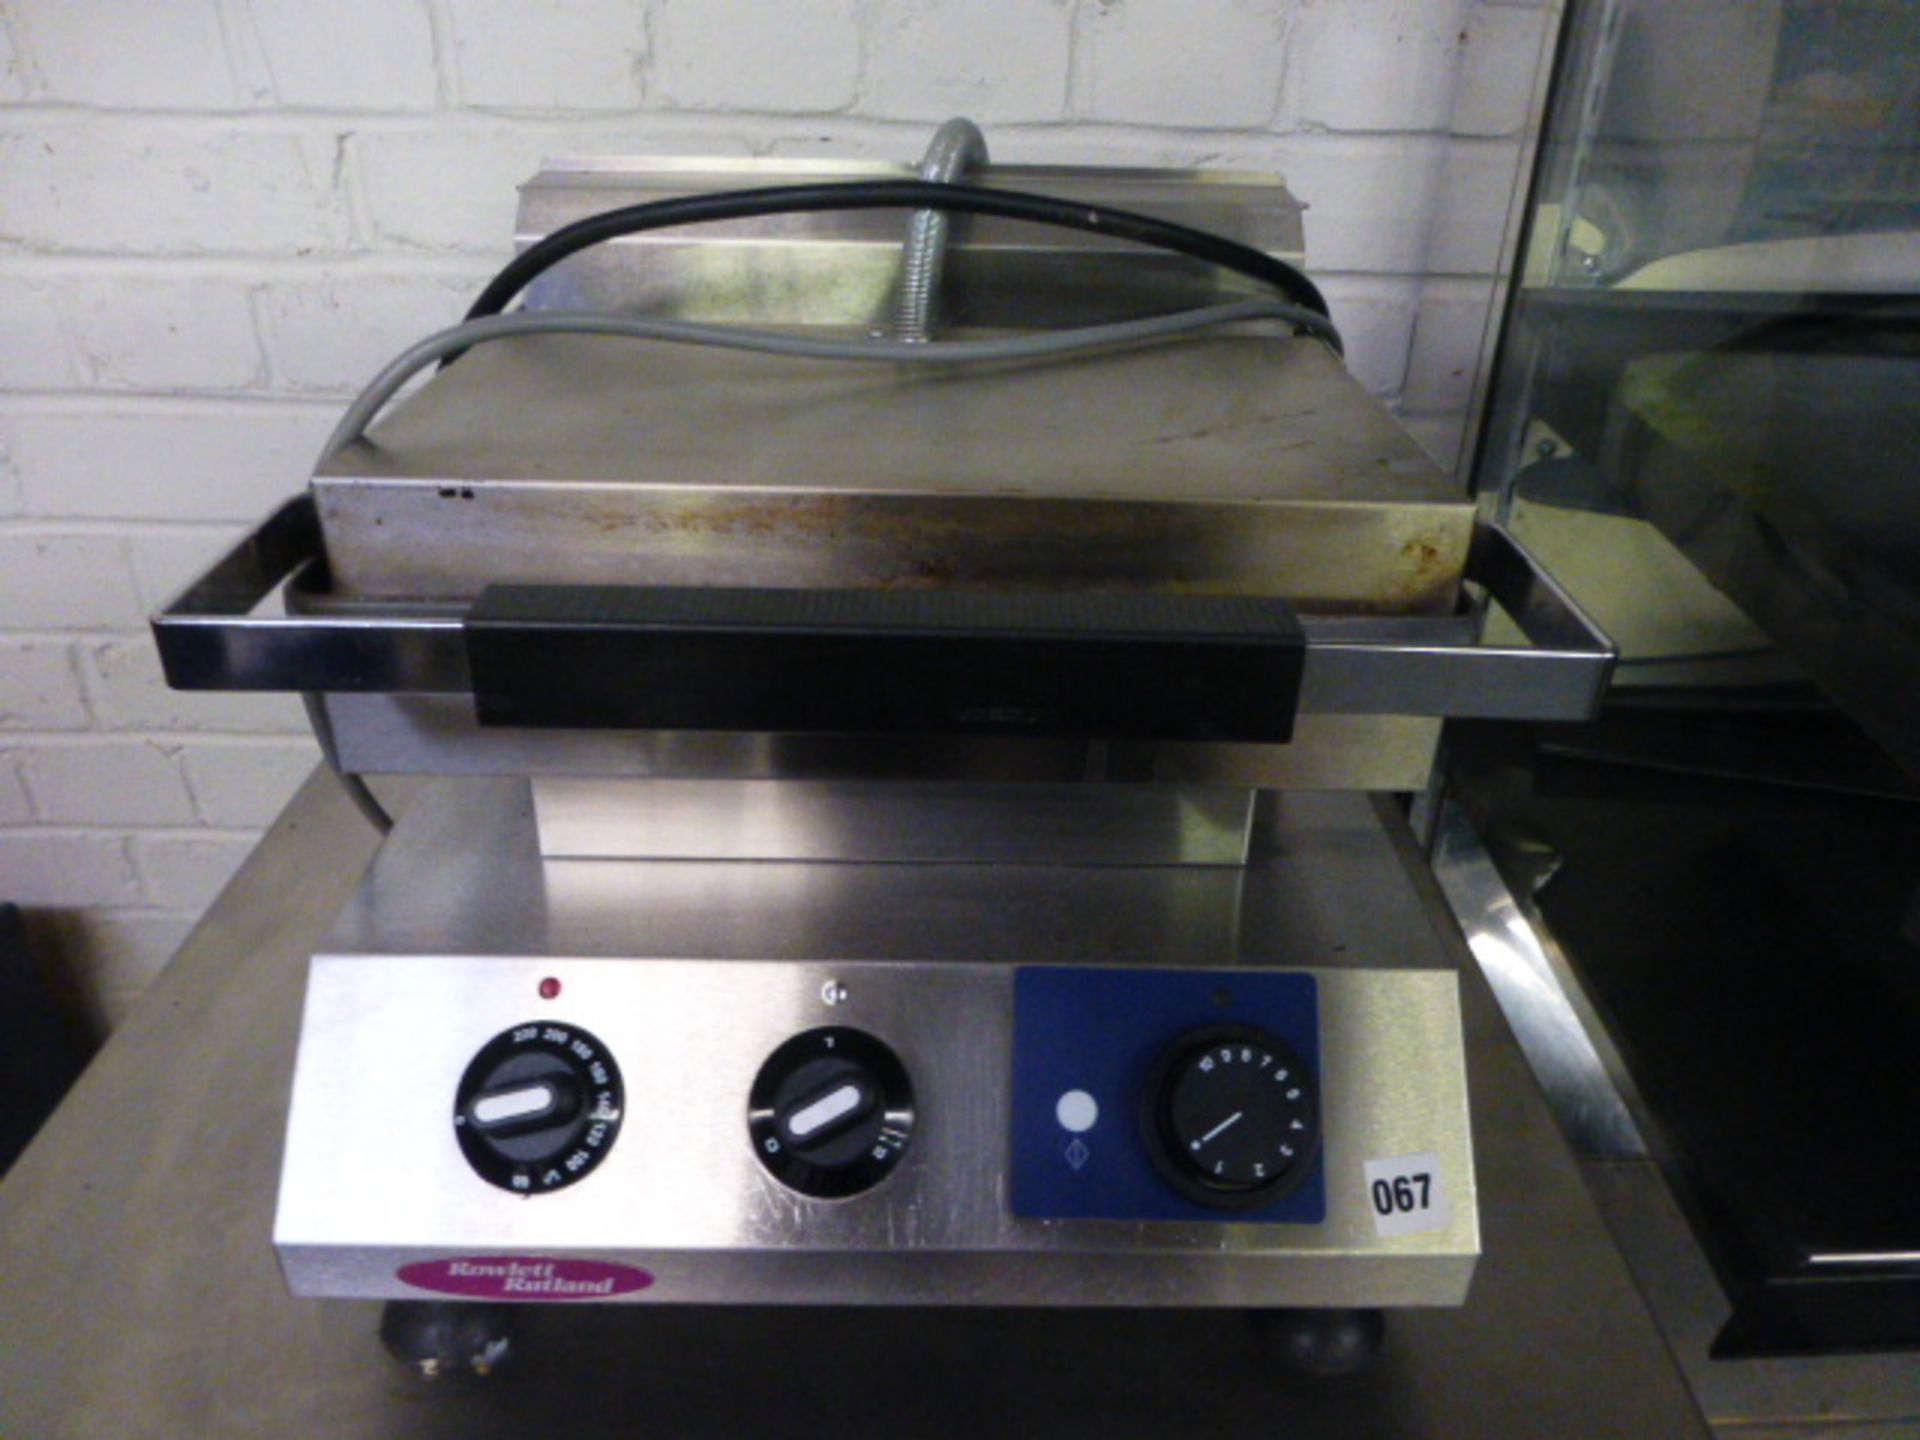 (12) 35cm electric Rowlett Ruttland double contact panini grill